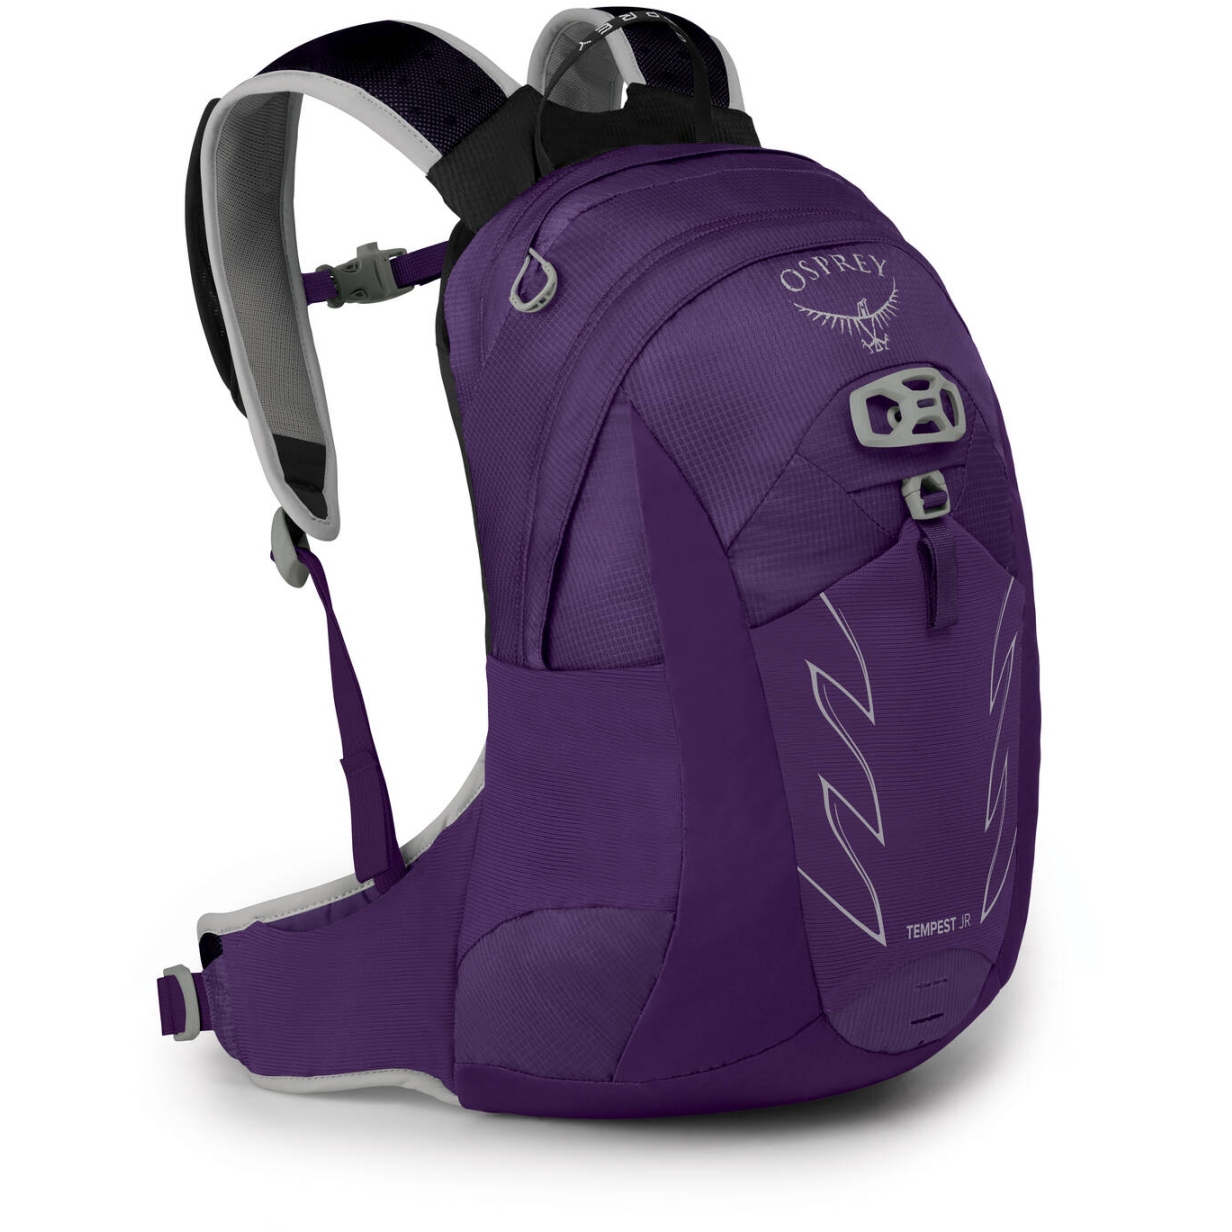 Picture of Osprey Tempest 14 Jr Kids Backpack - Violac Purple